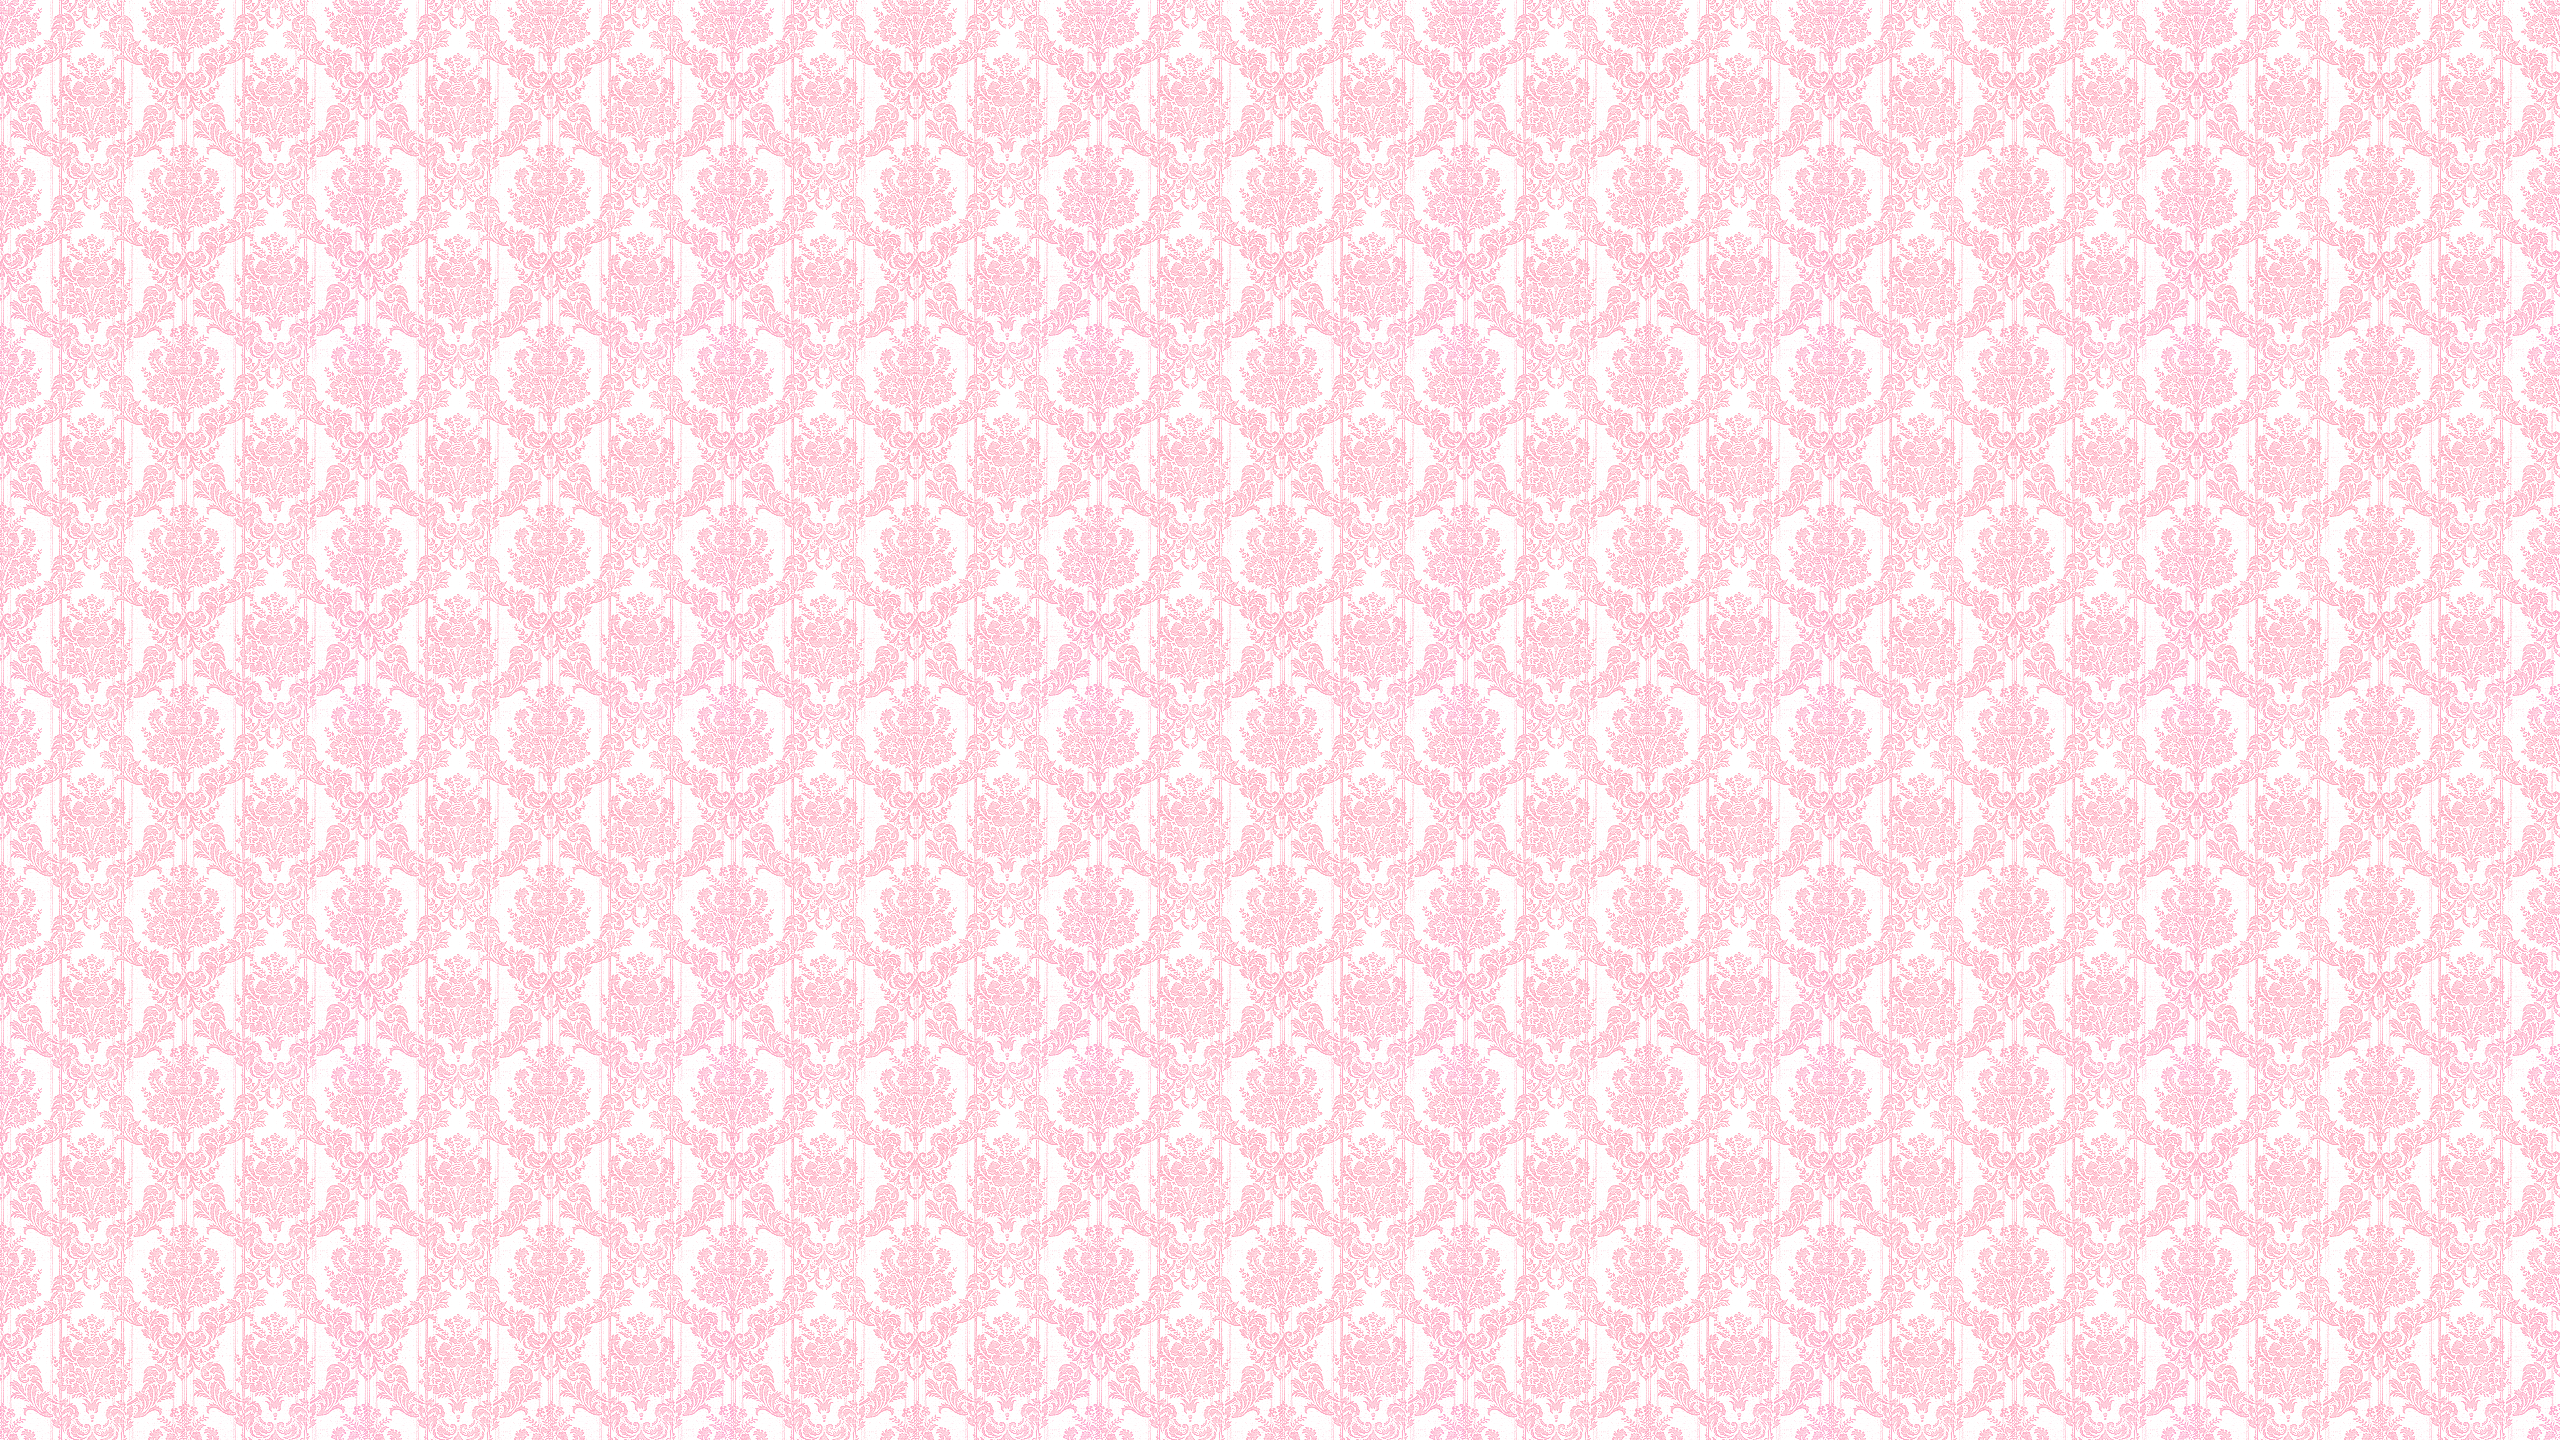 Wallpaper.wiki Pink Damask Desktop Wallpaper PIC WPD009390